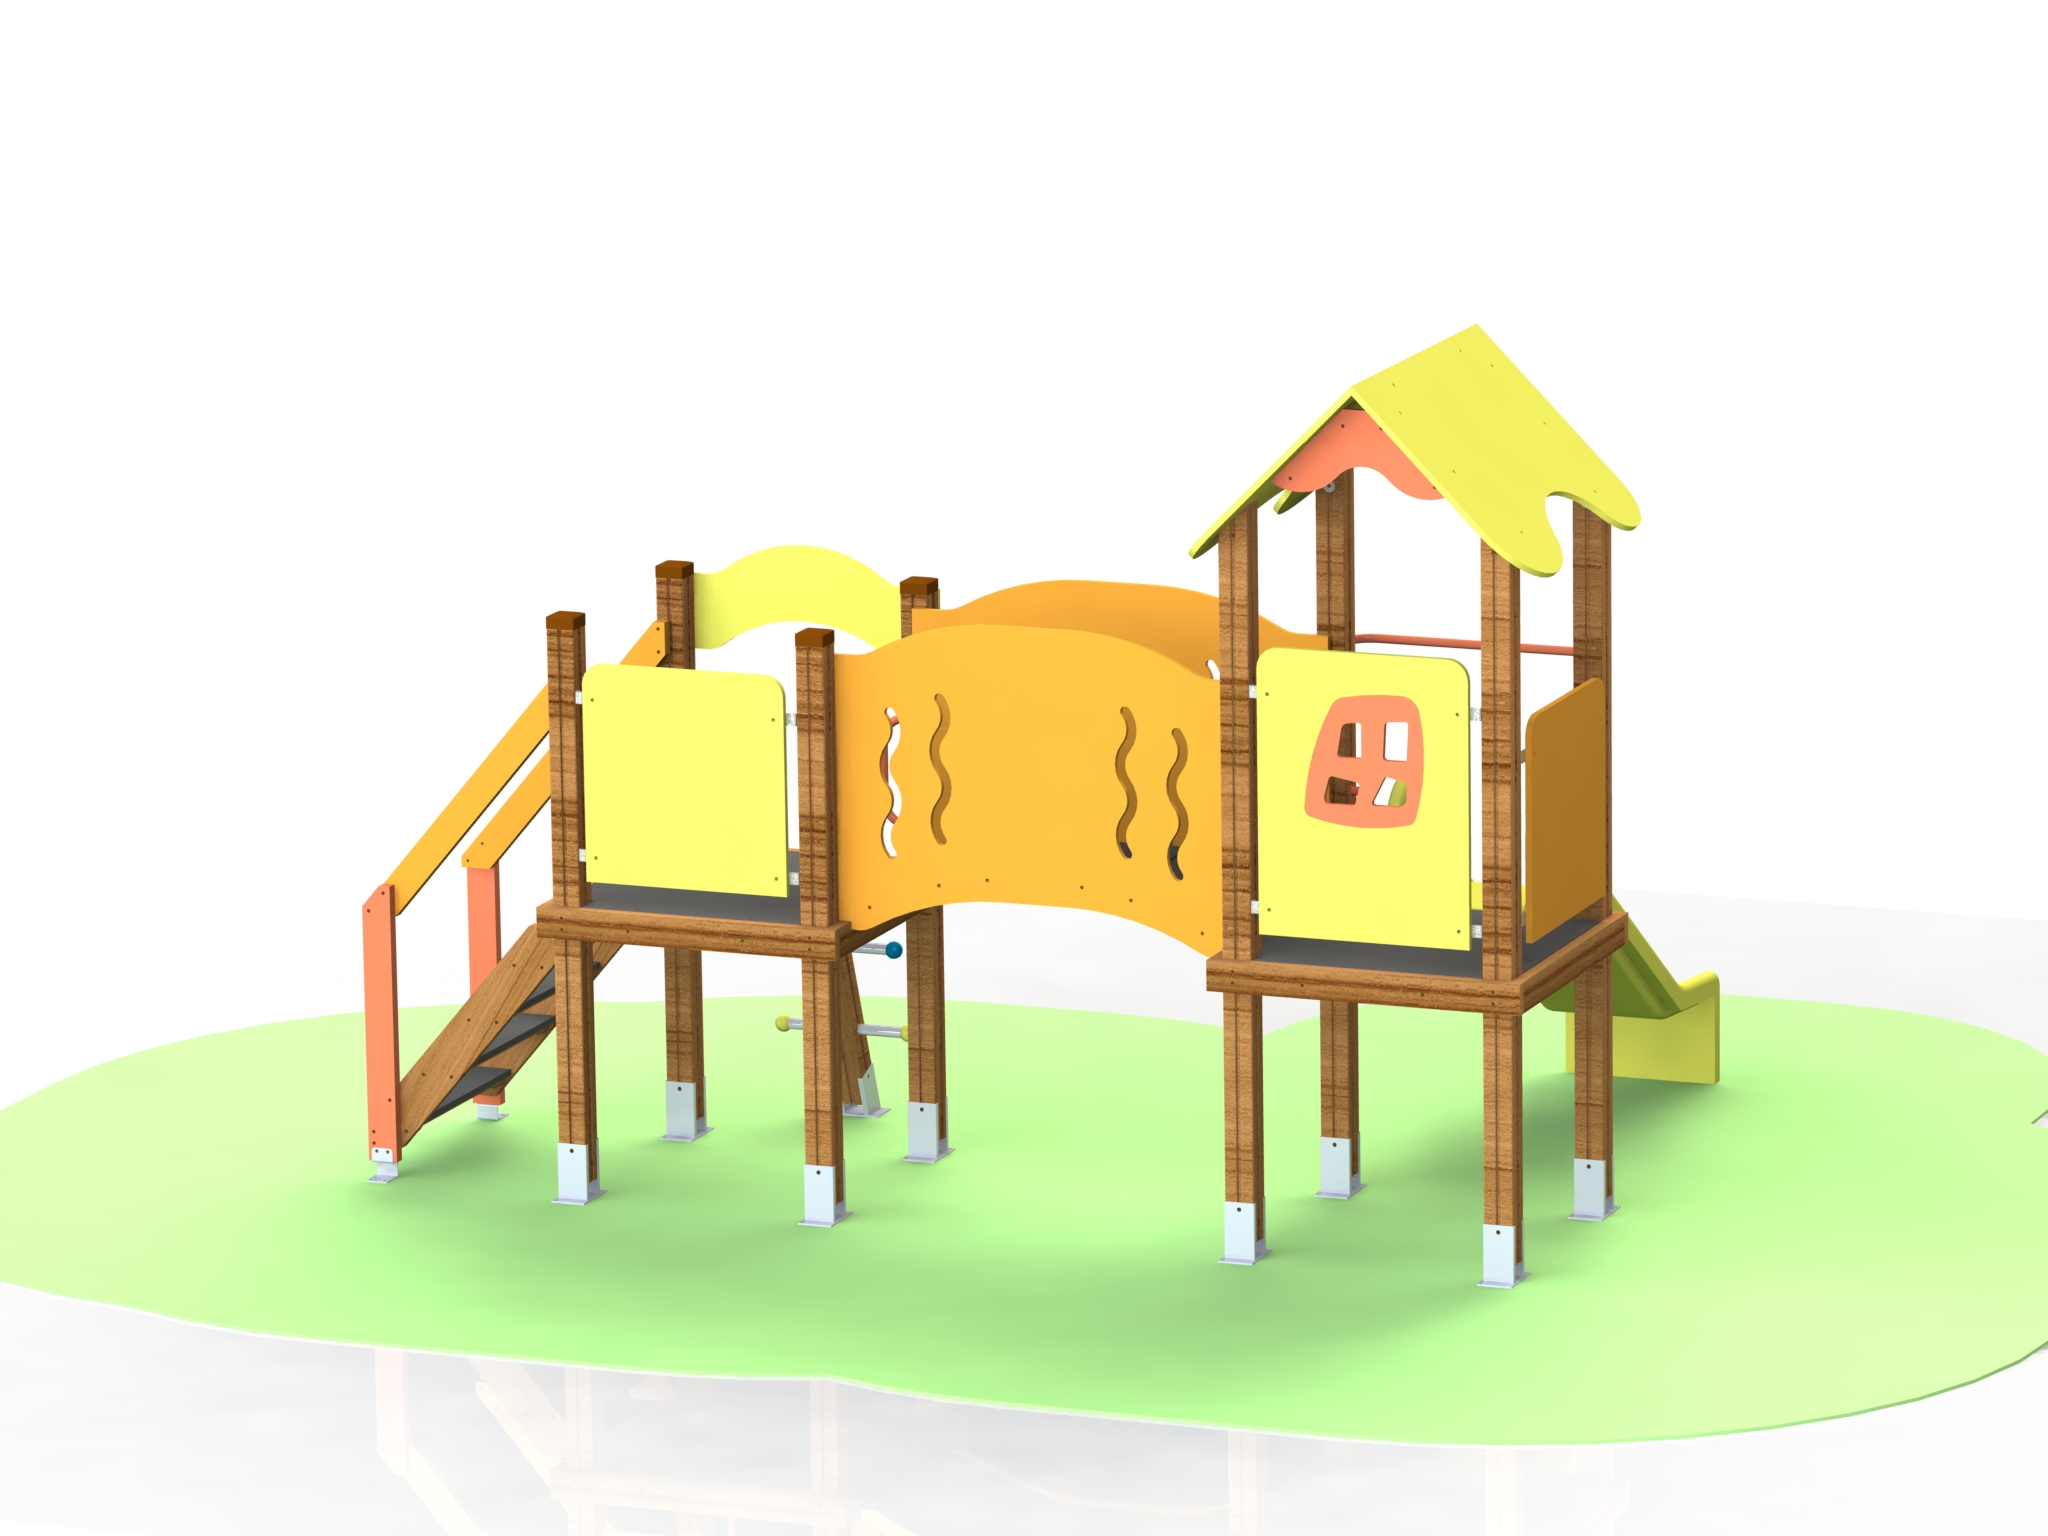 Combined playground equipment, model КД106